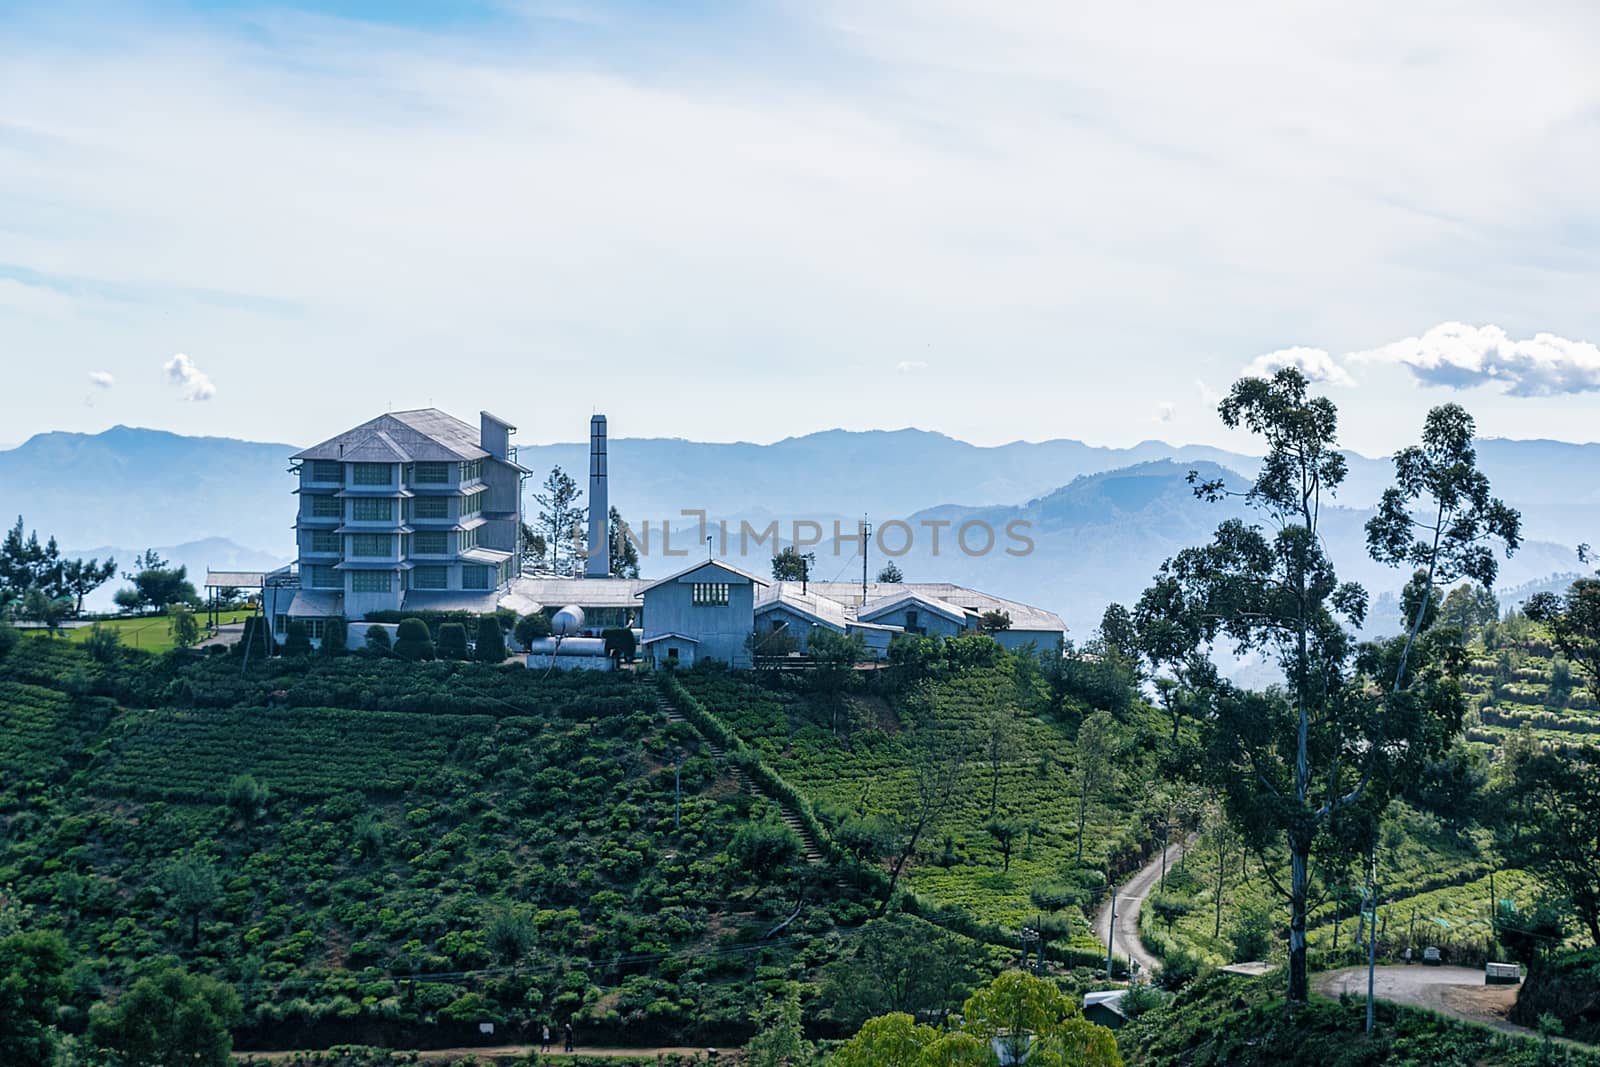 Nyura Ellia, Sri Lanka, Aug 2015: Tea Factory sitting on top of a hill